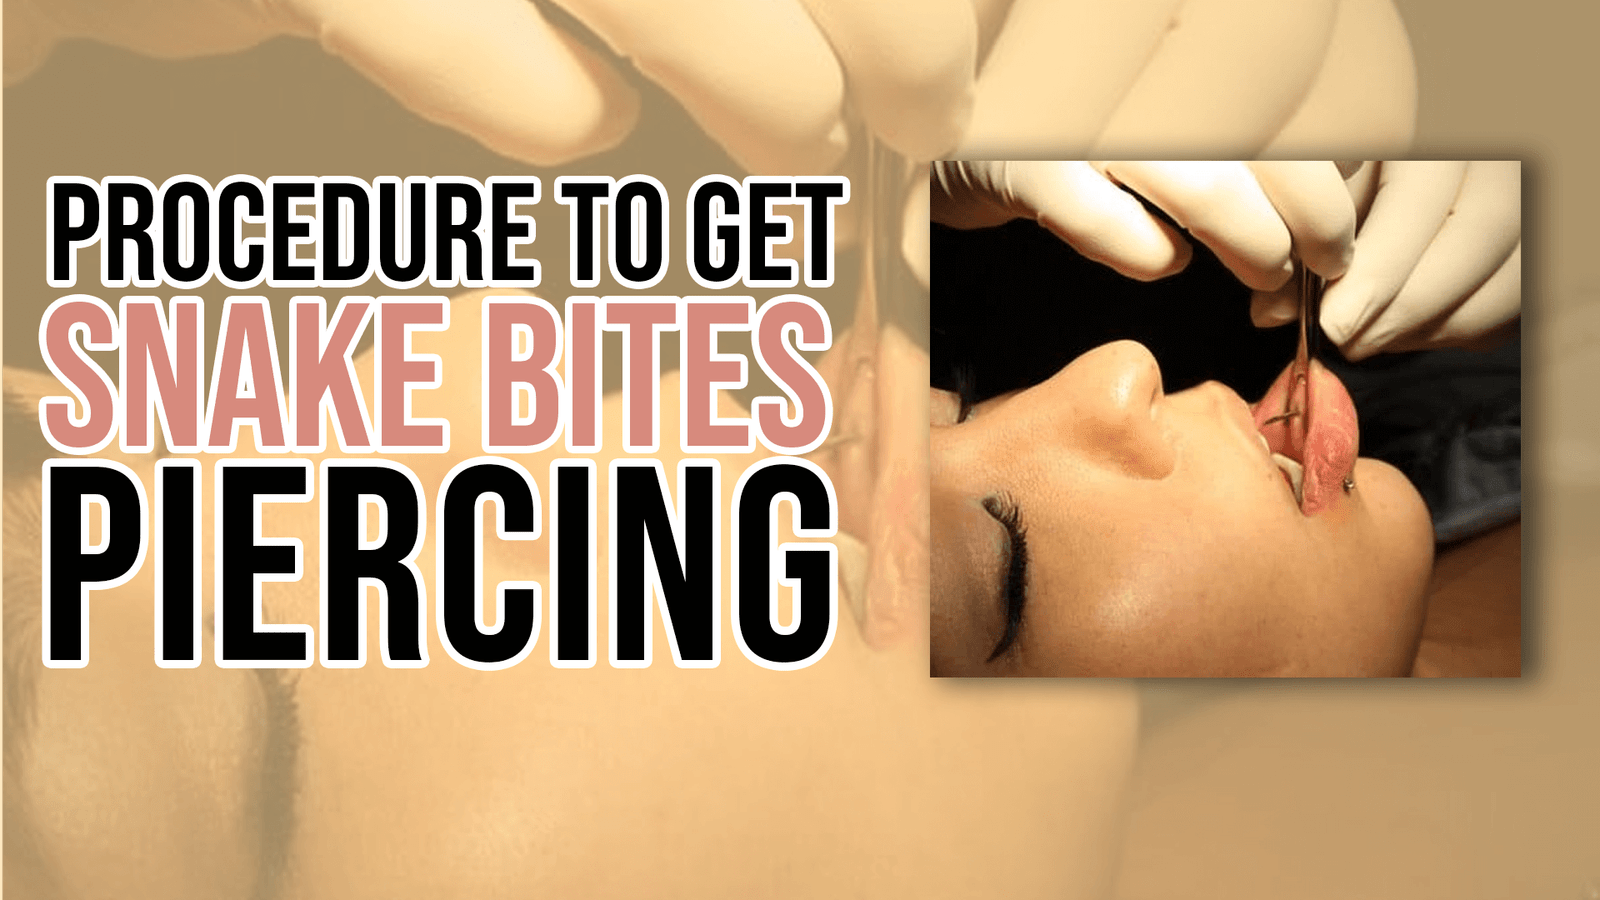 Procedure to get Snake Bites Piercing